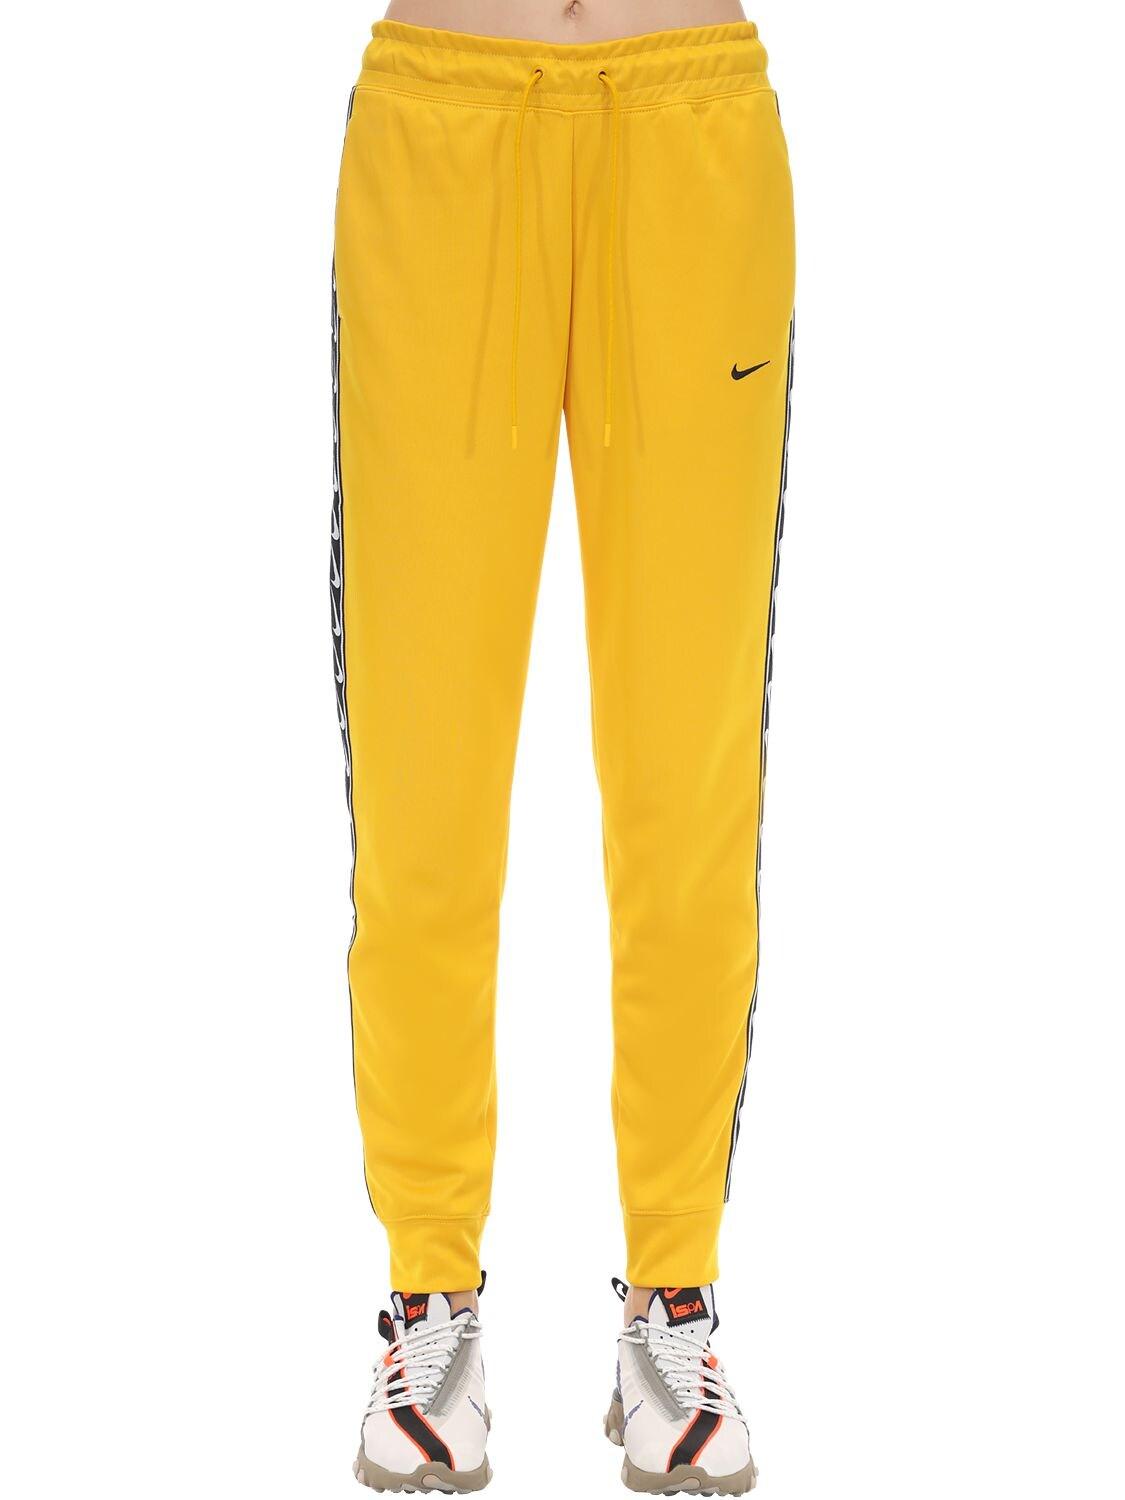 Nike Jogger Logo Tape Sweatpants in Yellow - Lyst